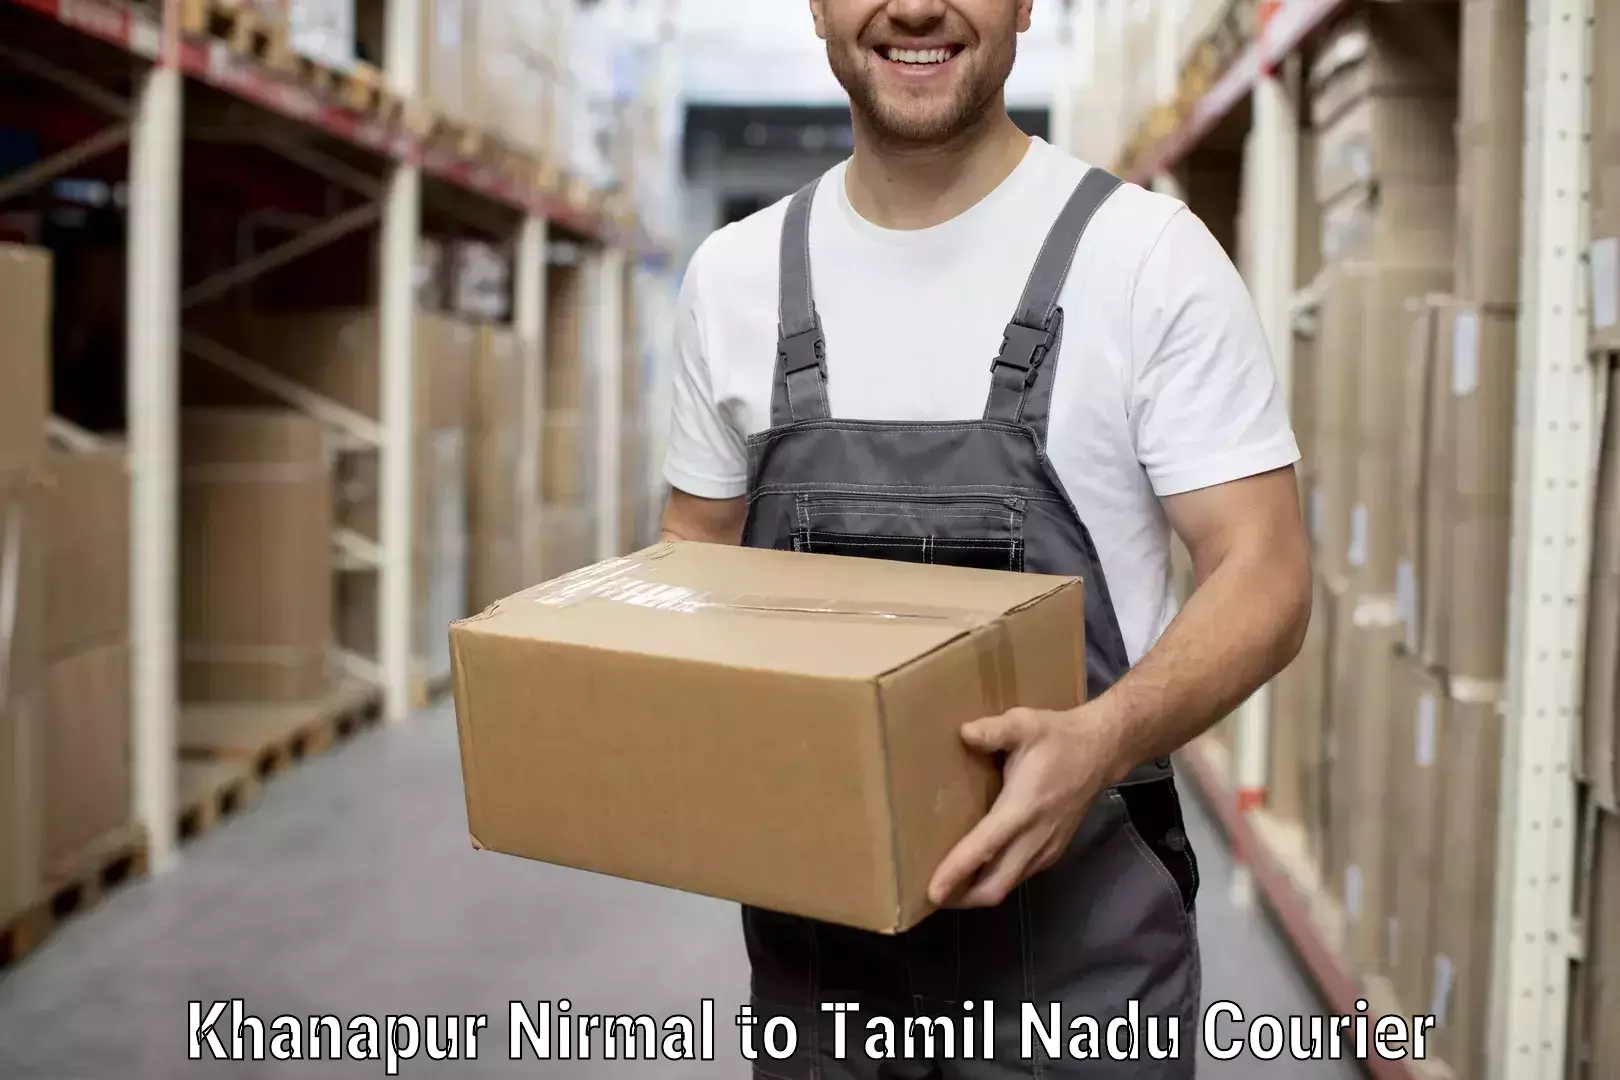 Professional moving company Khanapur Nirmal to Sivakasi